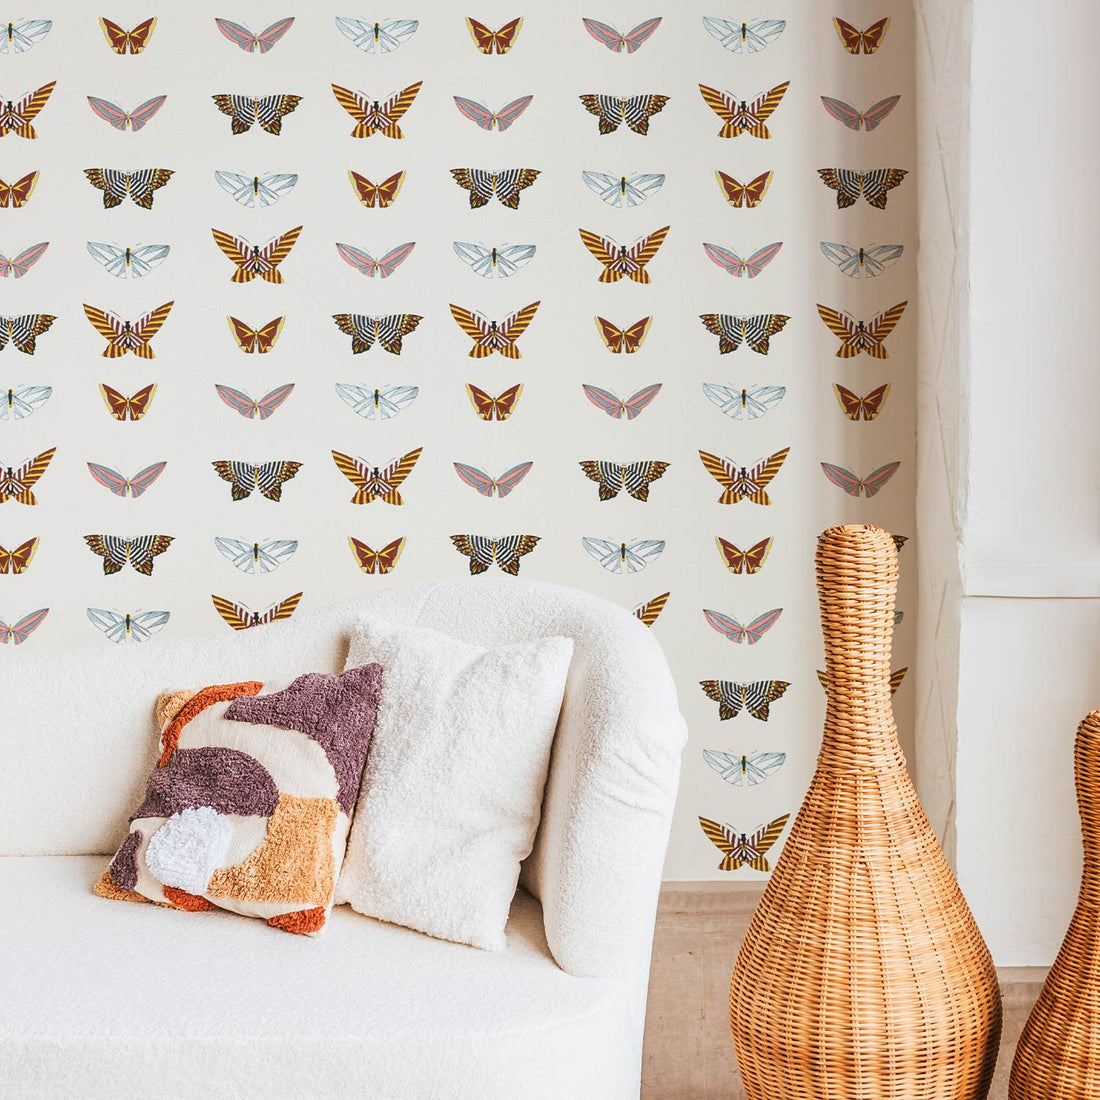 Vintage butterfly design wallpaper in bohemian girls room interior